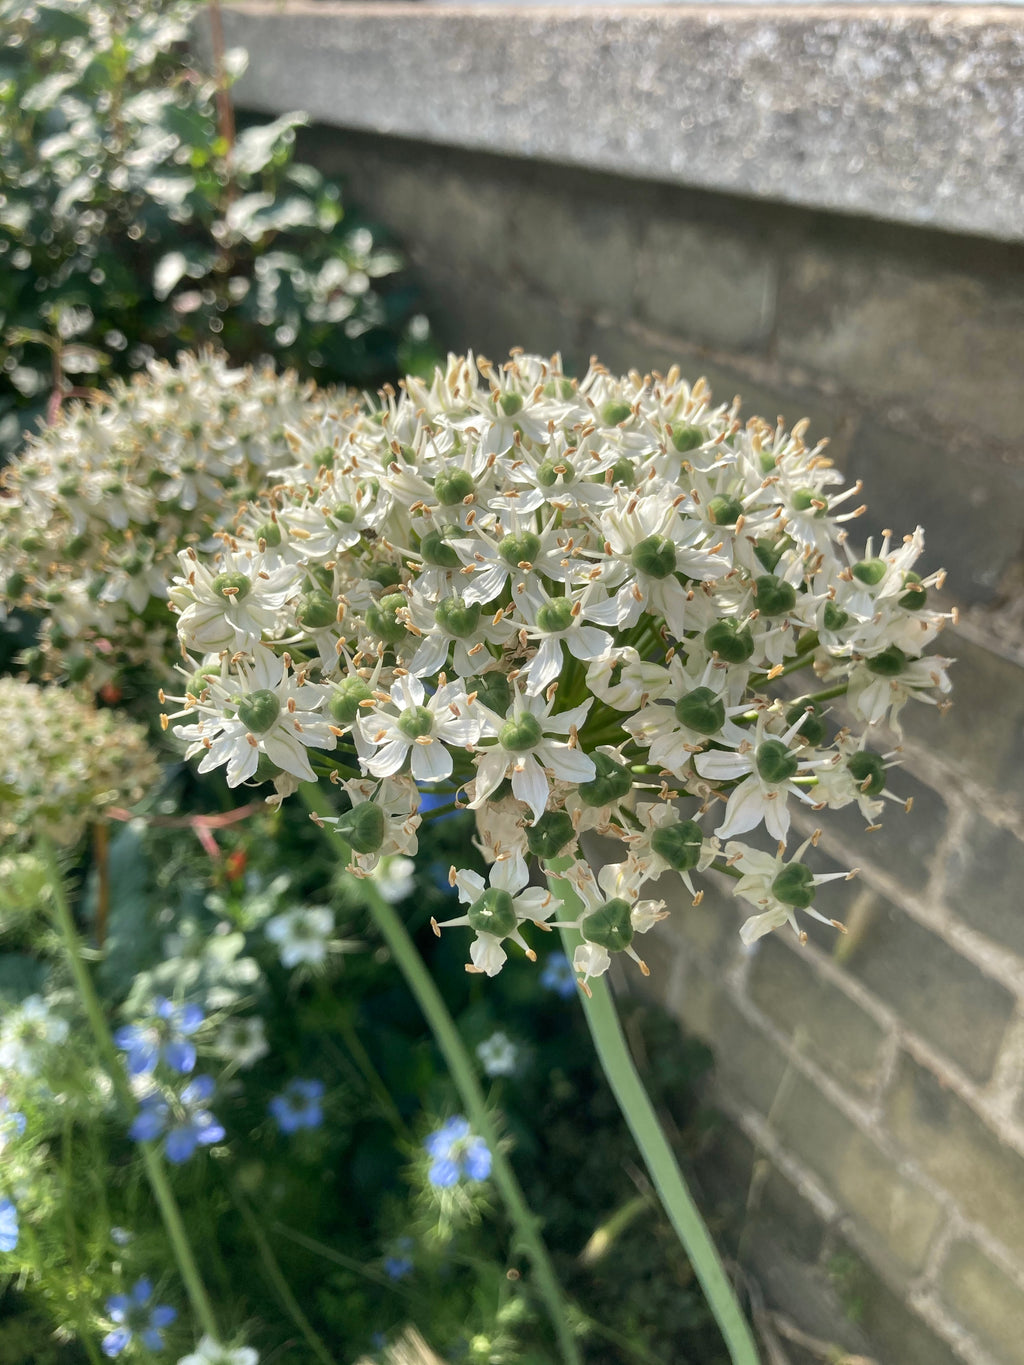 2 x Allium nigrum multibulbosom (Black Garlic) Bulbs To Plant Yourself (Free UK Postage)